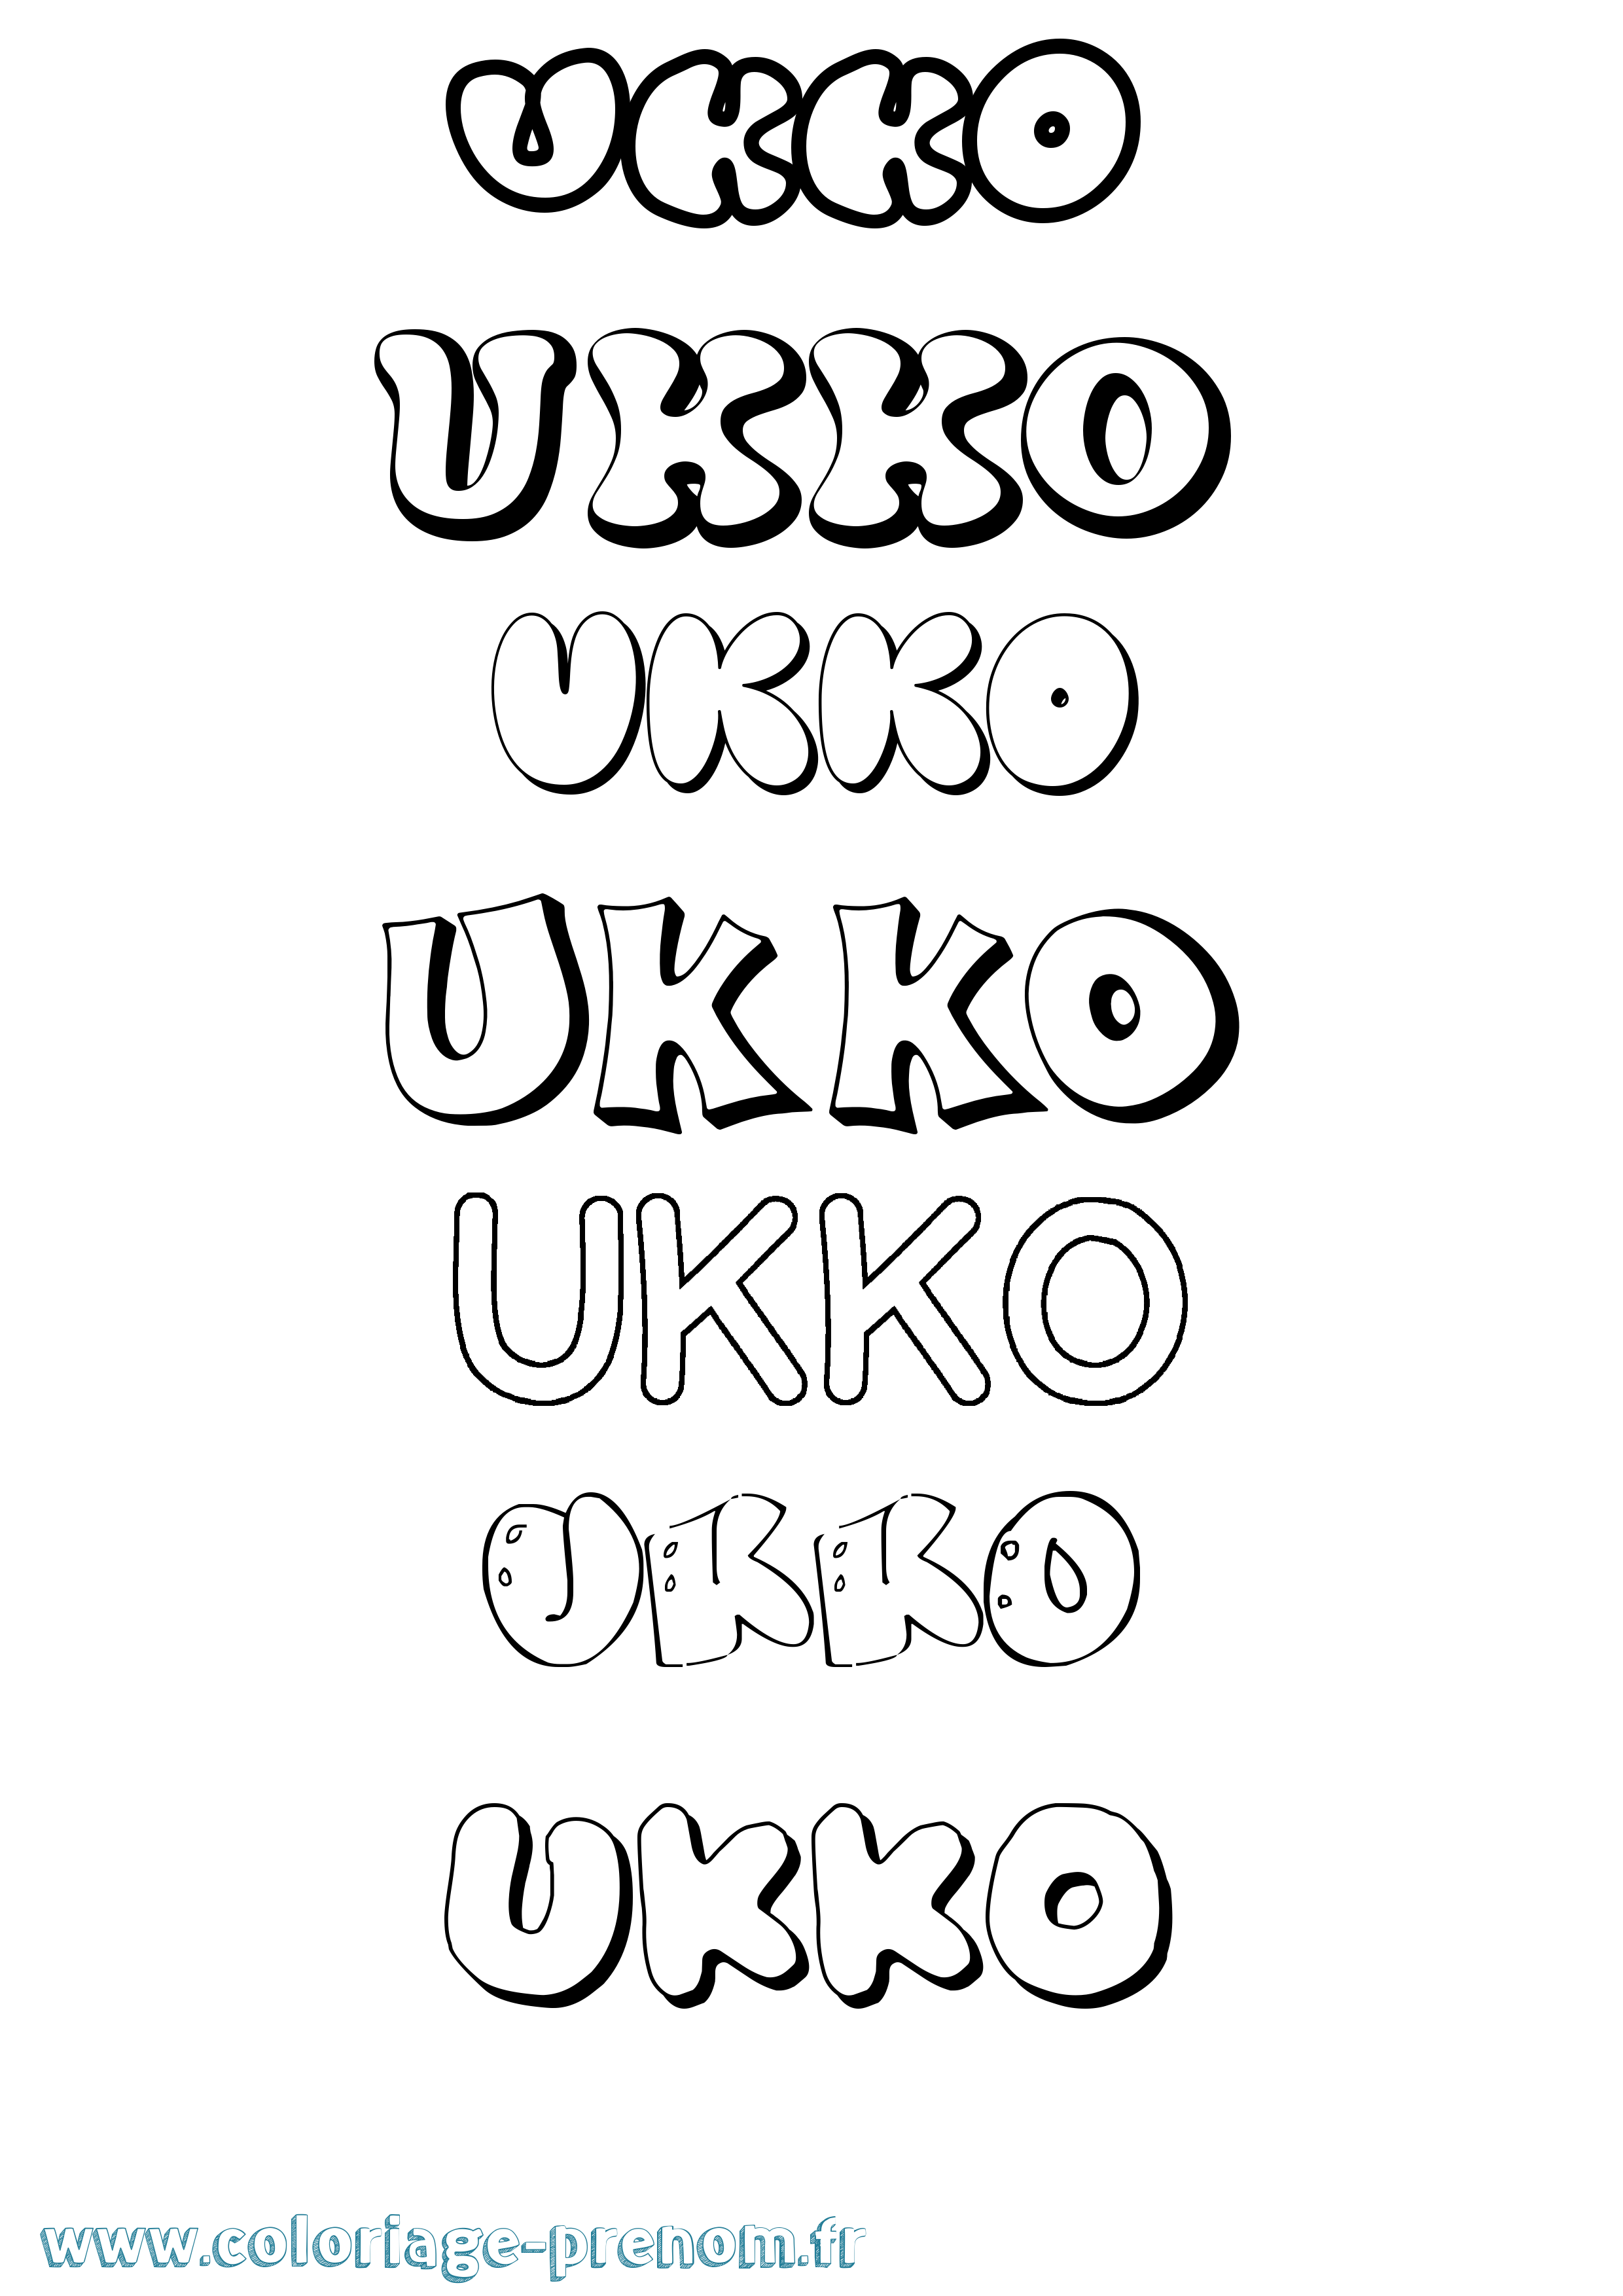 Coloriage prénom Ukko Bubble